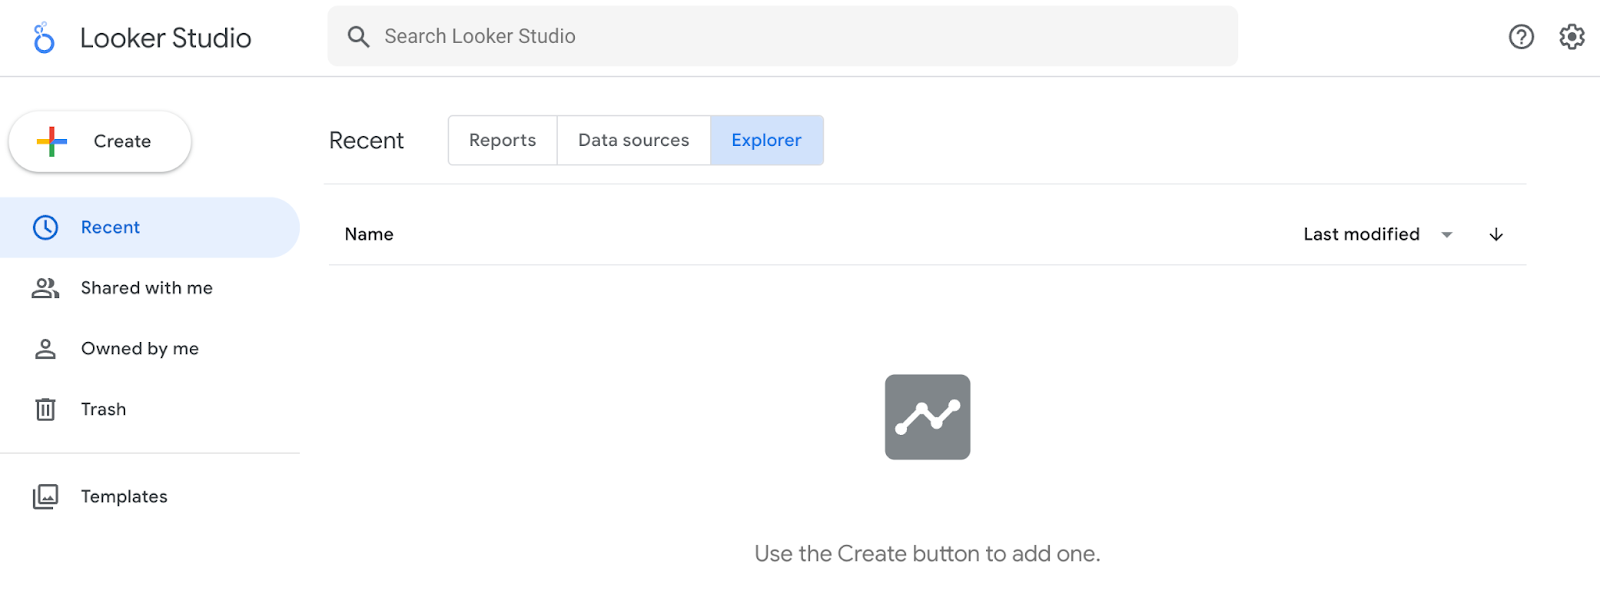 How to Use Google Looker Studio: Explorer